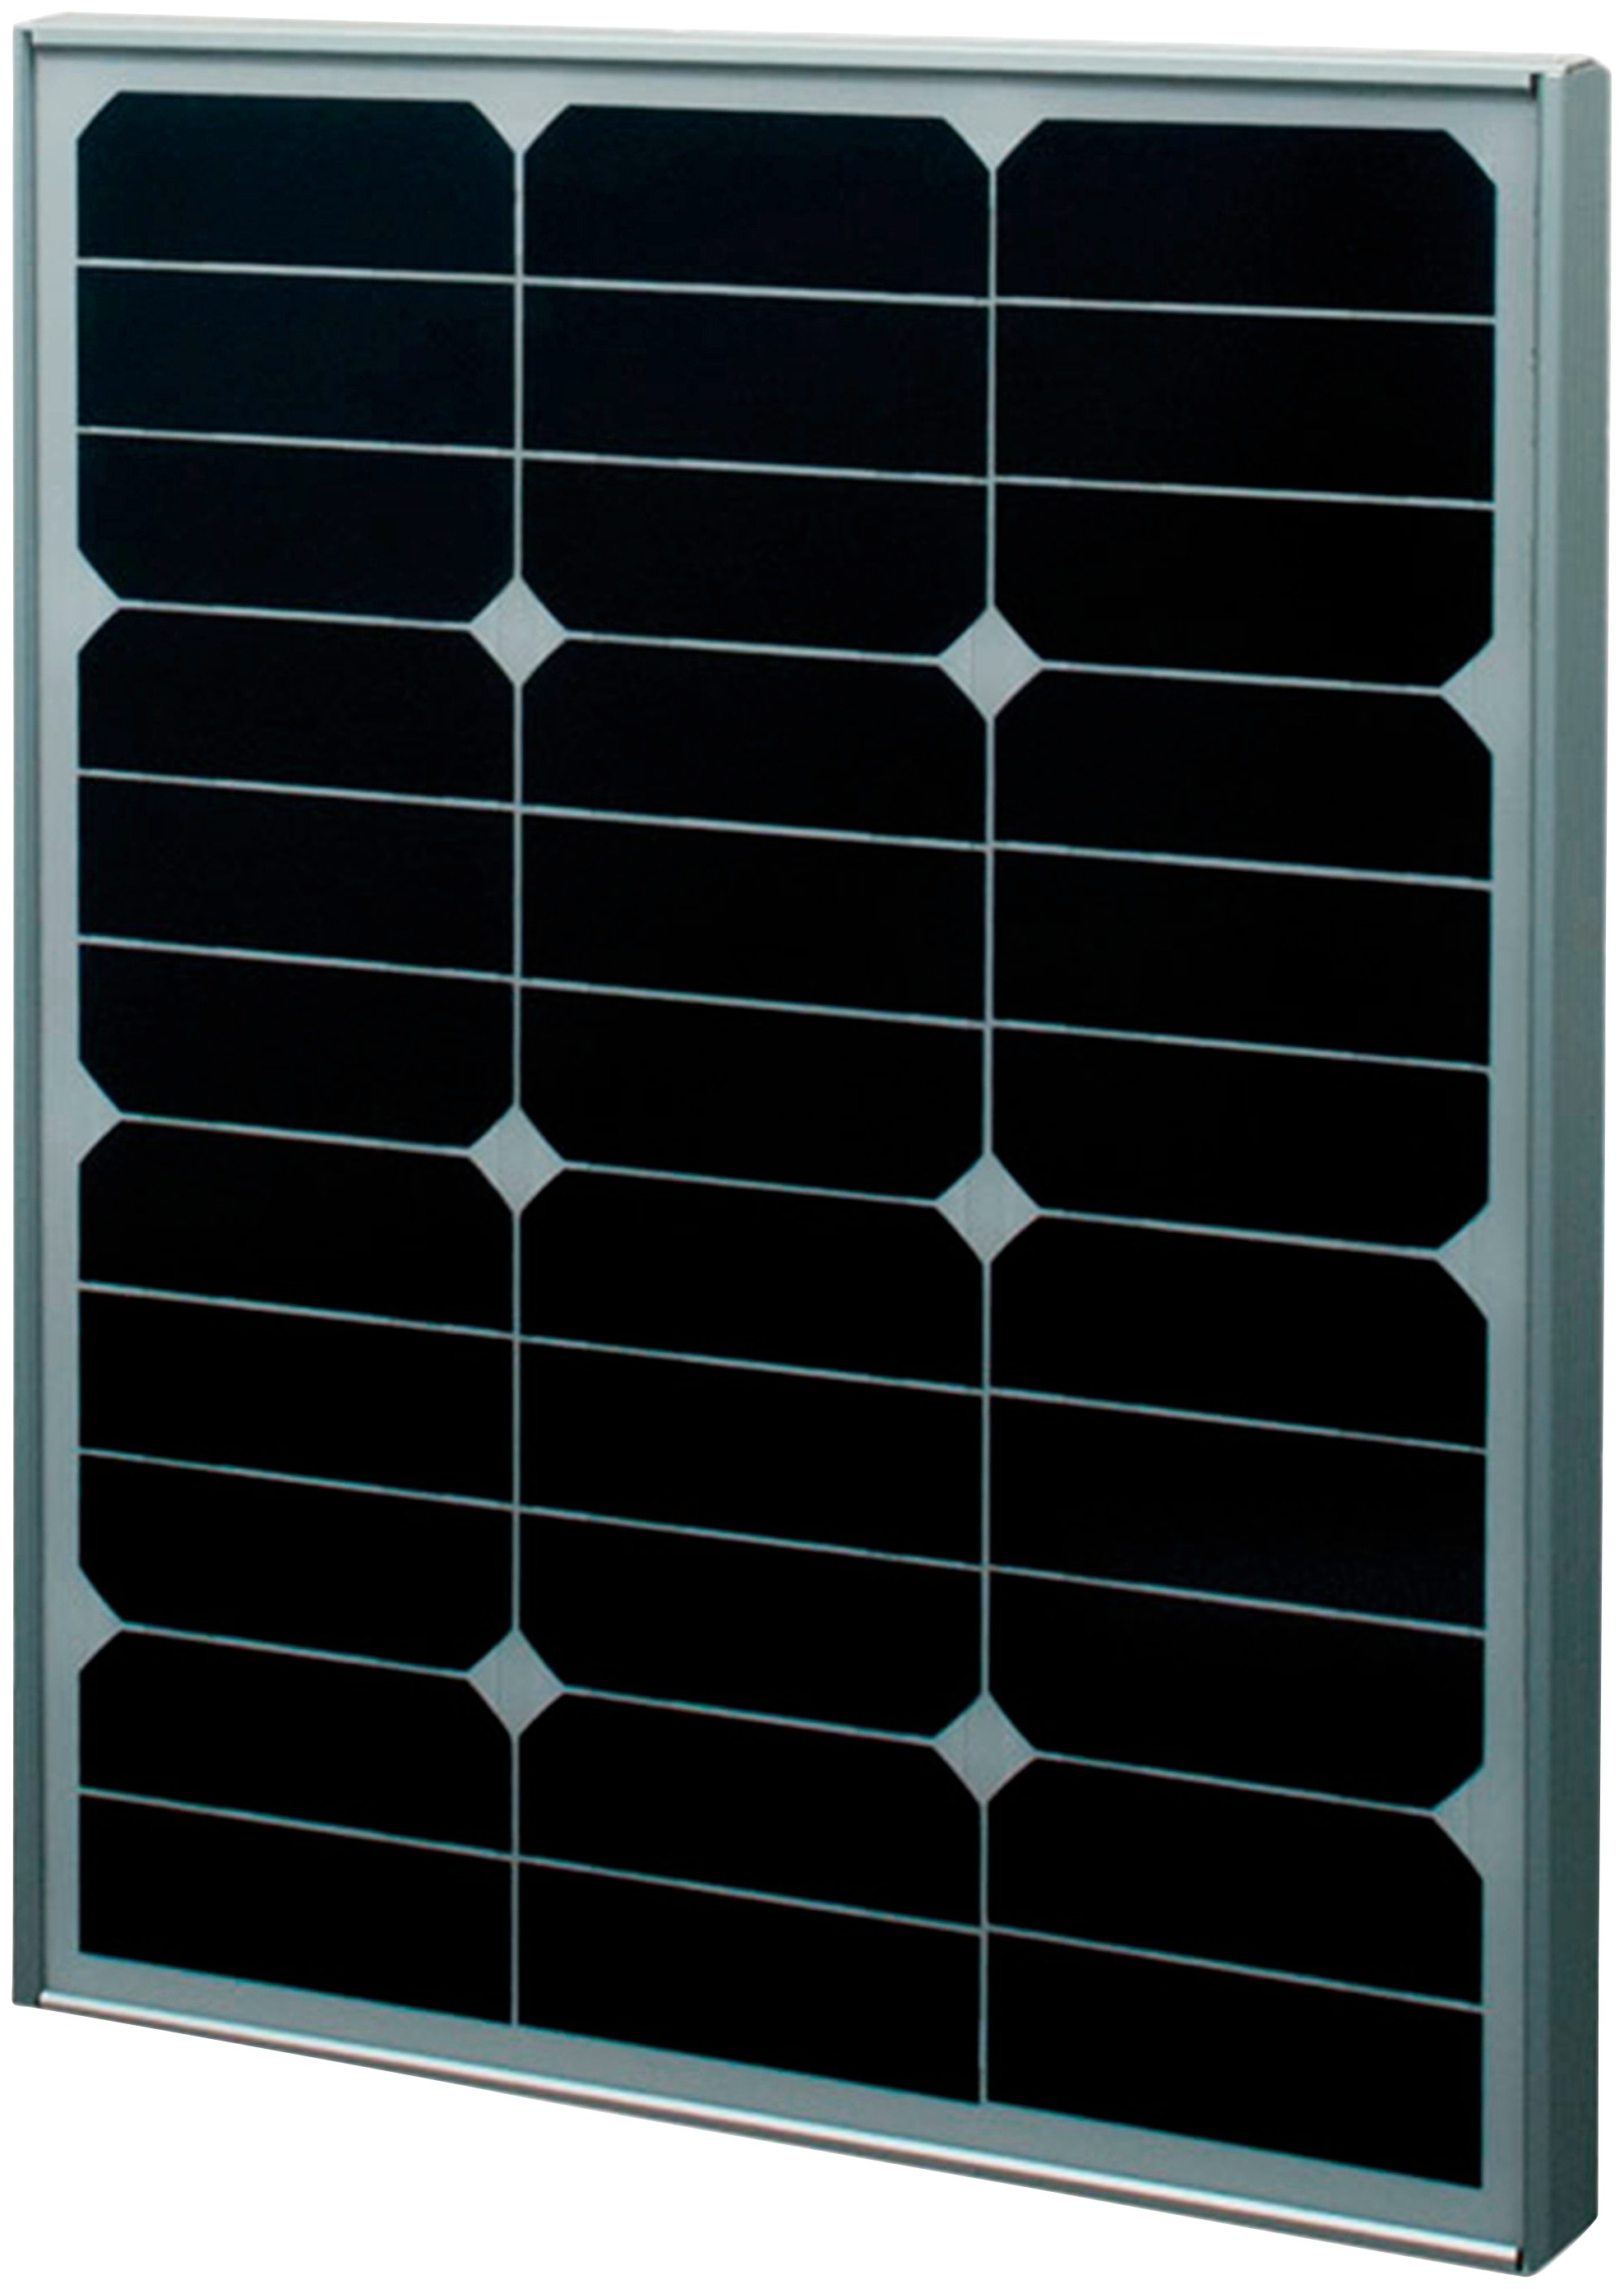 Solarmodul »Sun Peak SPR 40«, 40 W, 12 VDC